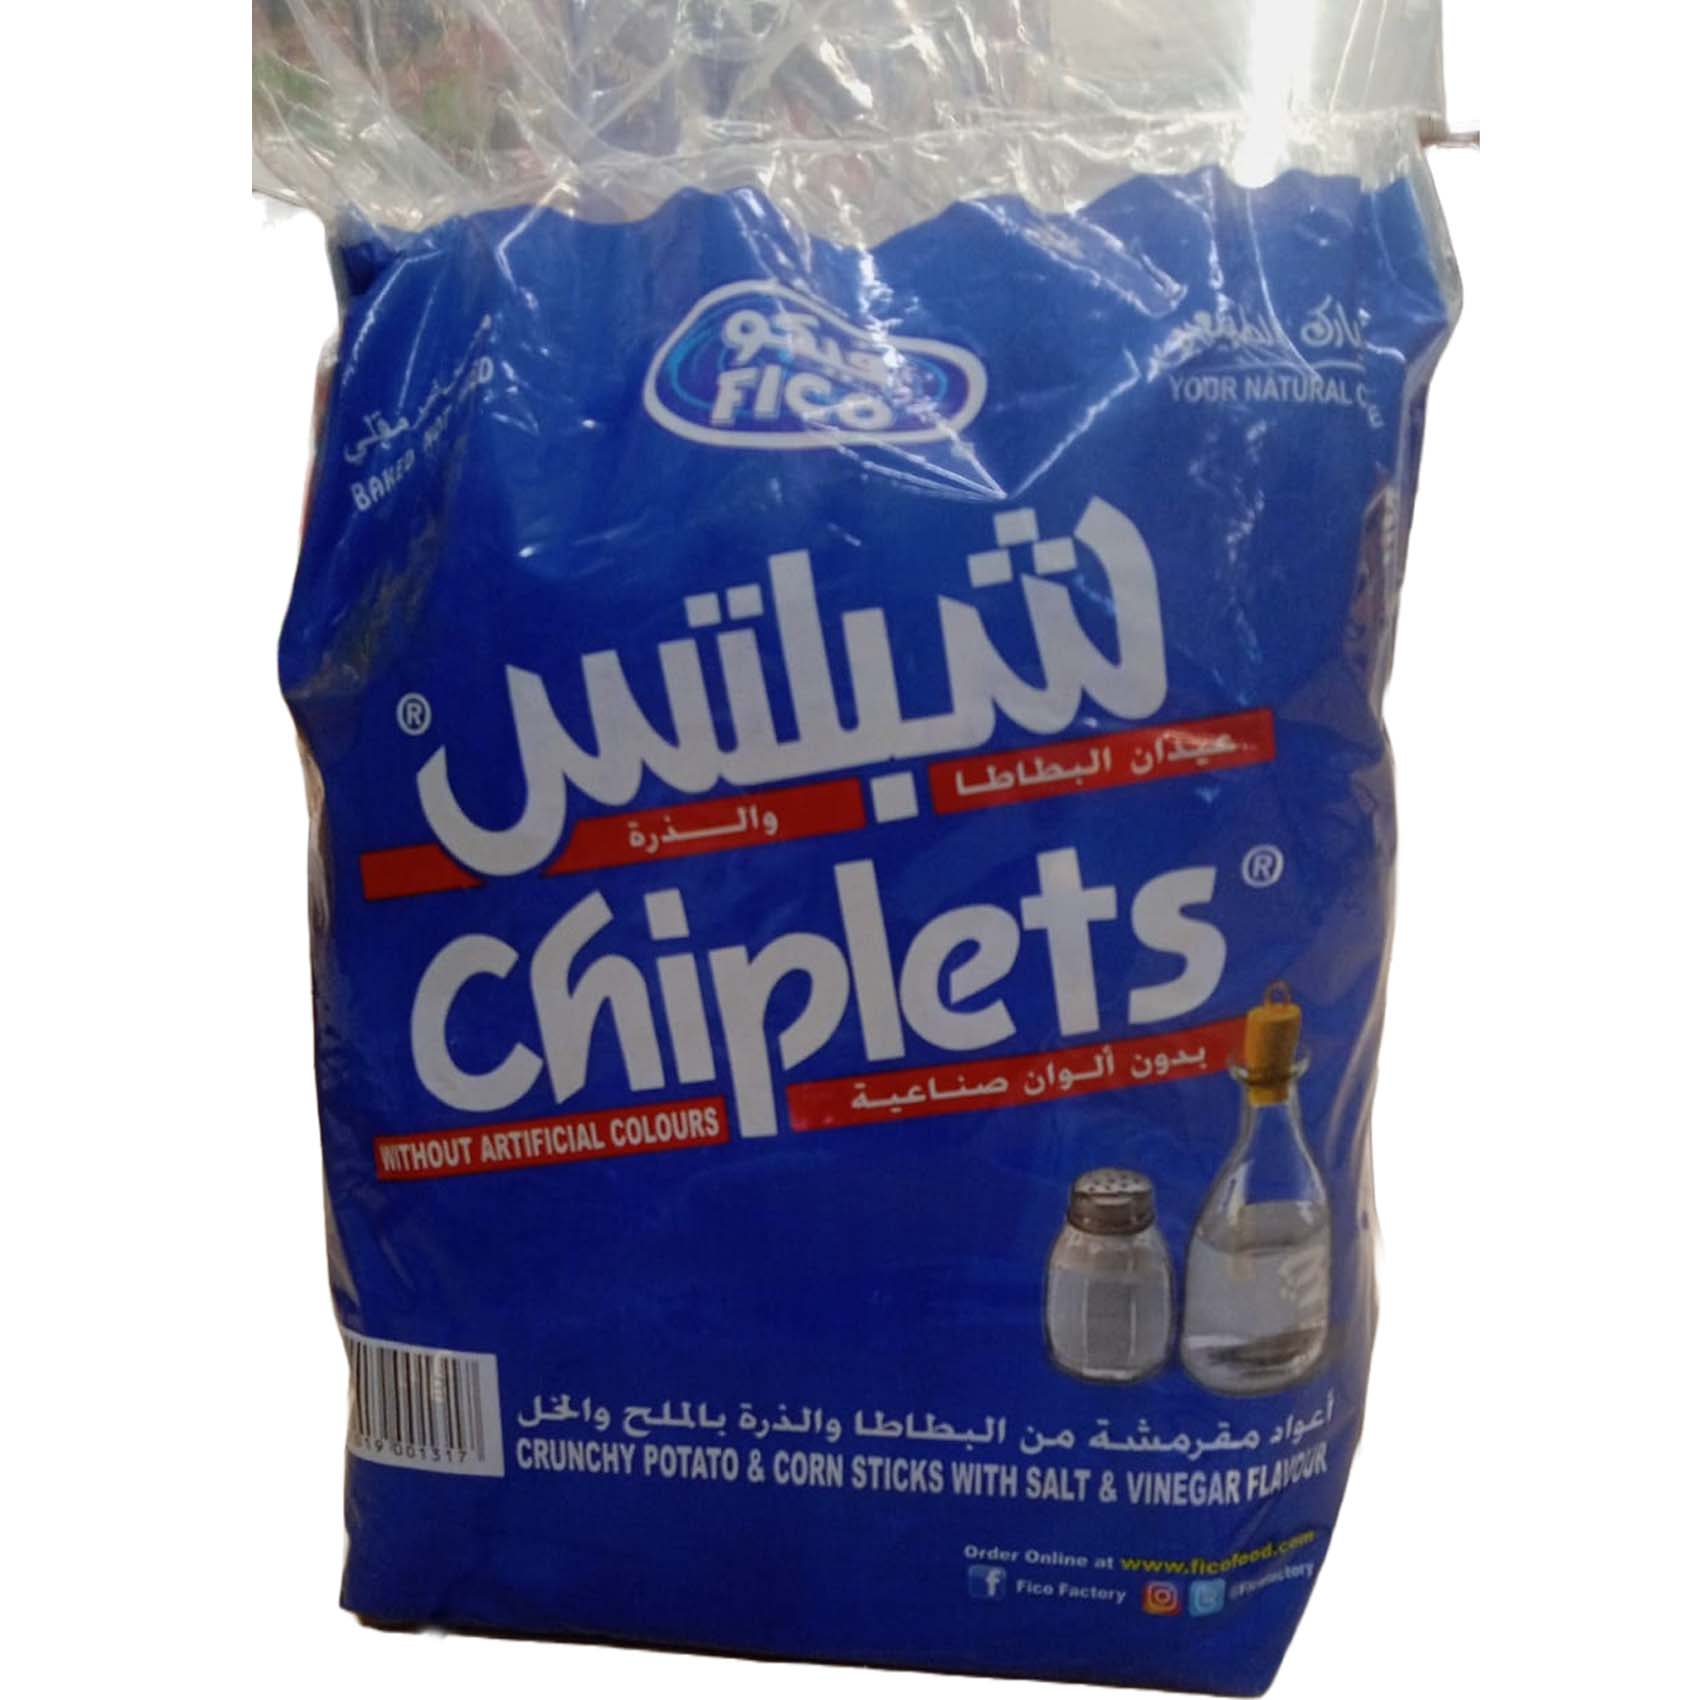 Chiplets Salt And Vinegar Potato And Corn Sticks 18g x Pack of 20